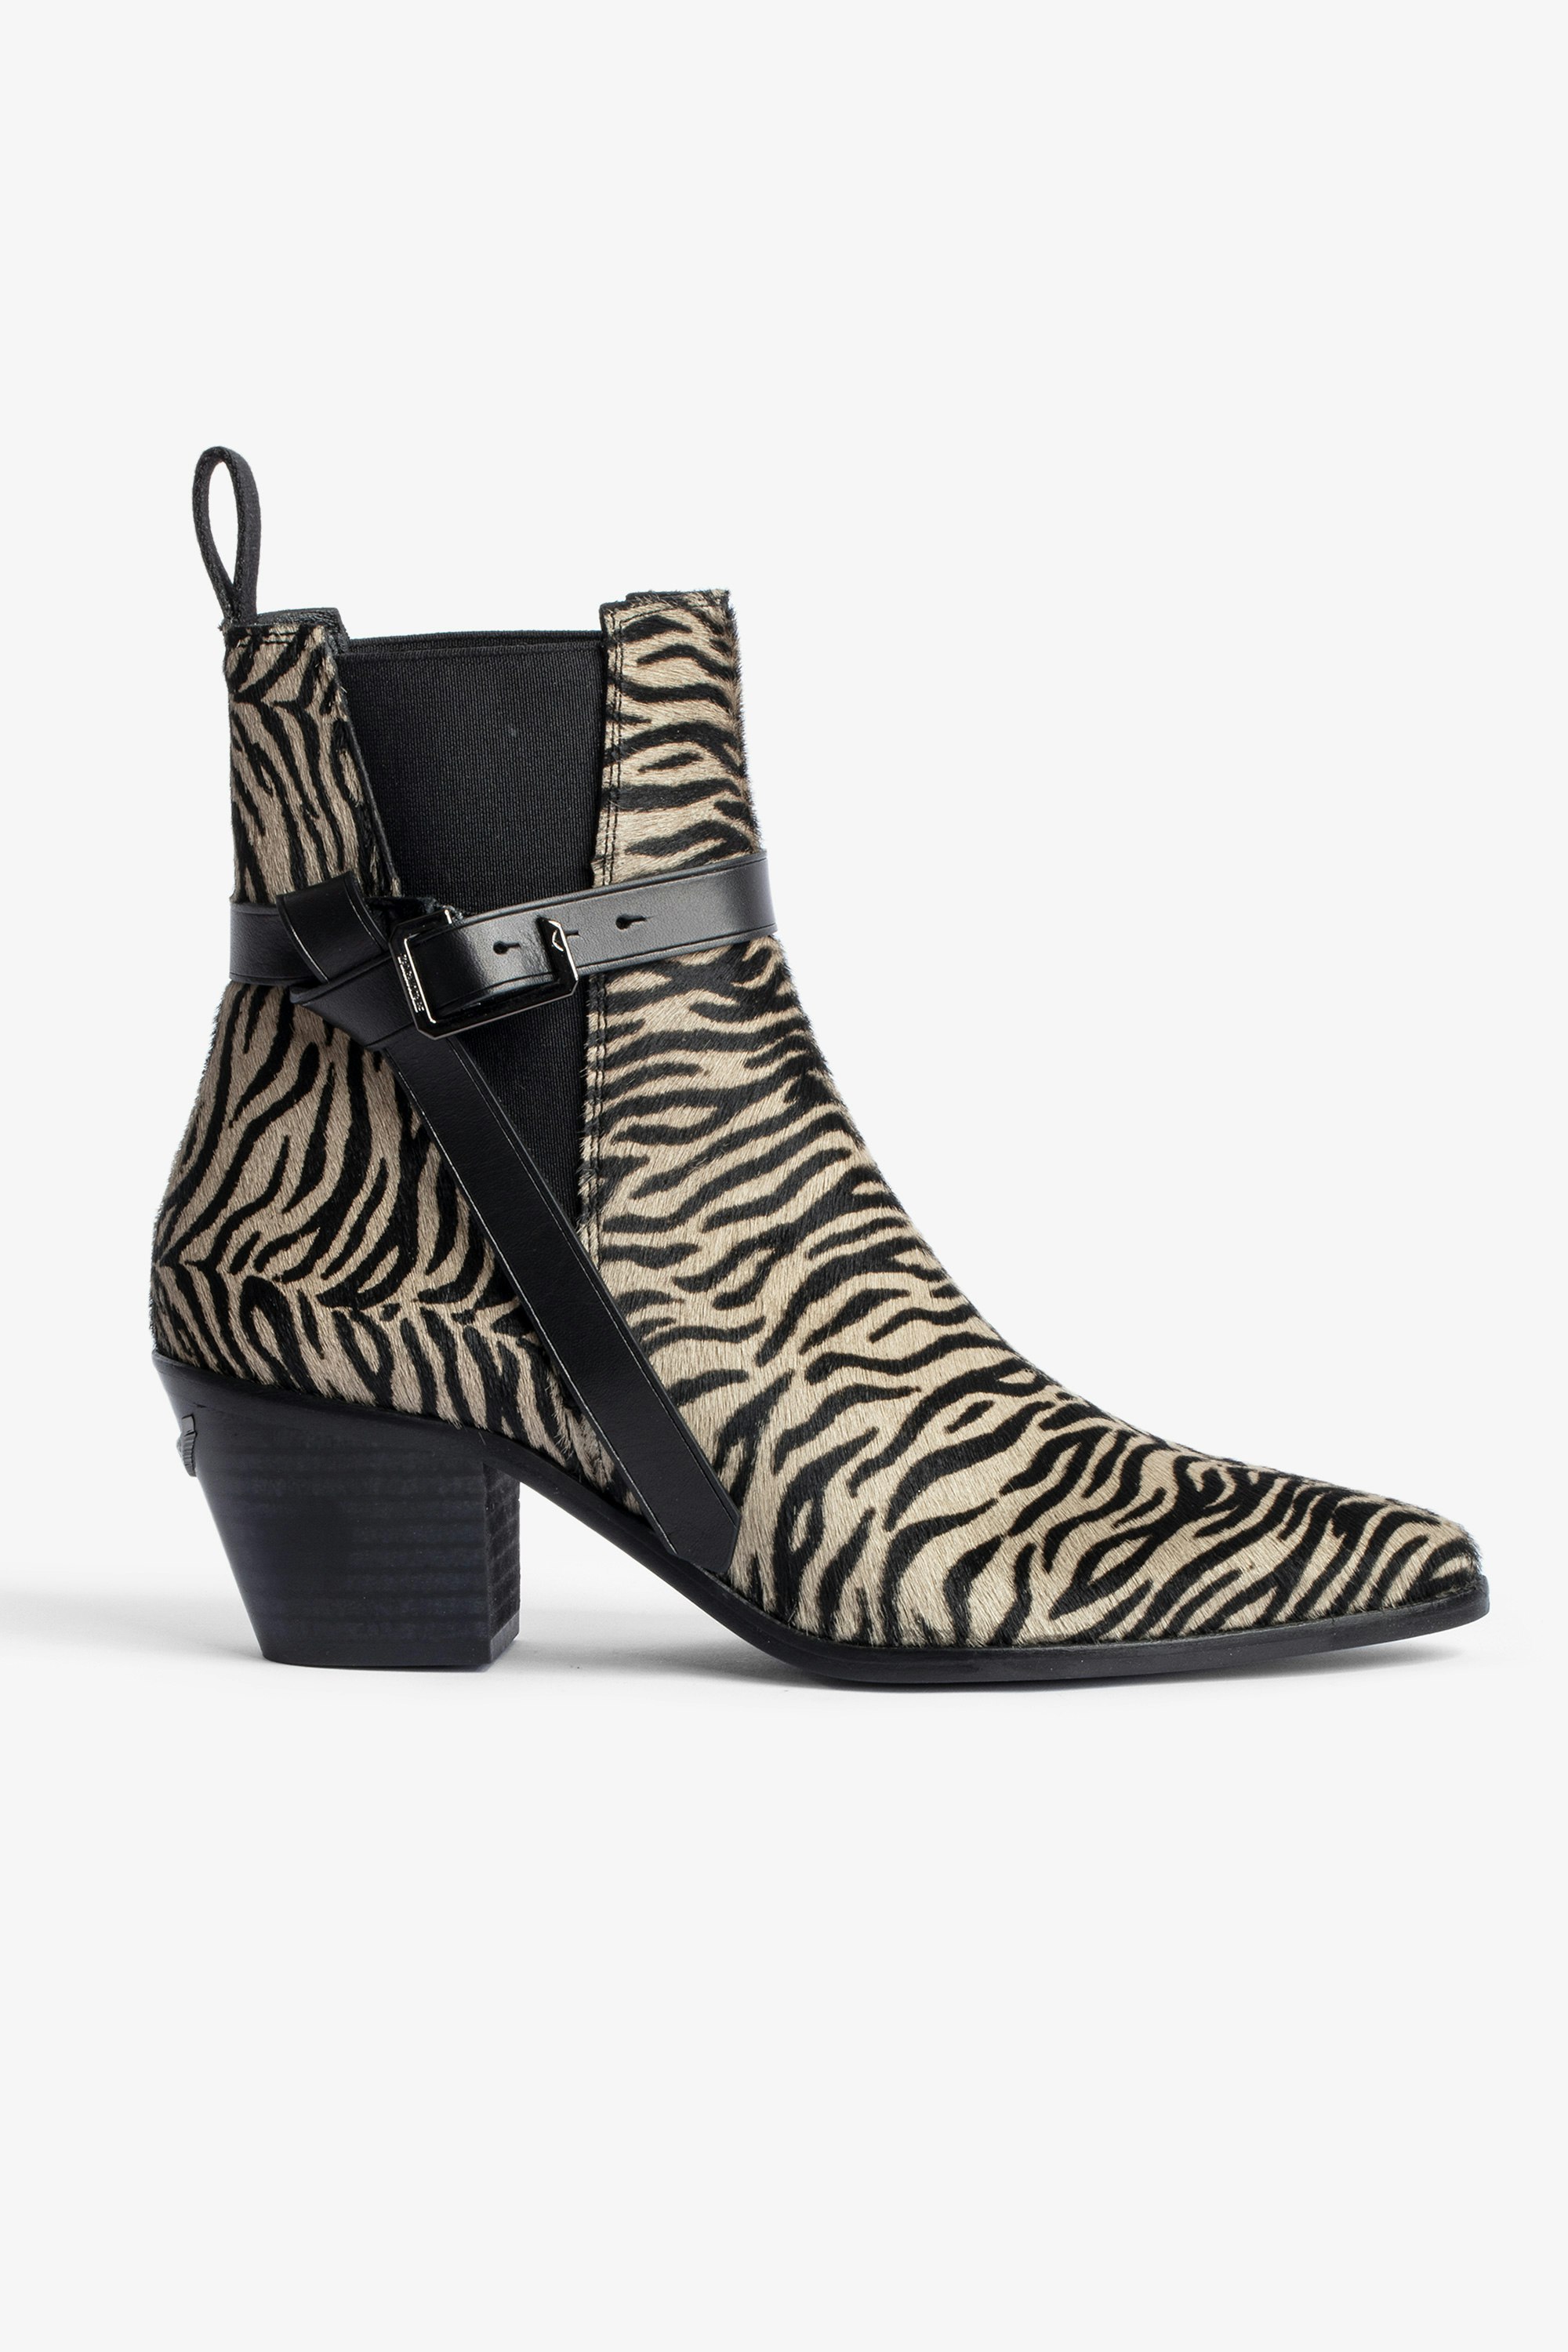 Samelli ankle boots Black 35                  EU discount 81% WOMEN FASHION Footwear Country 